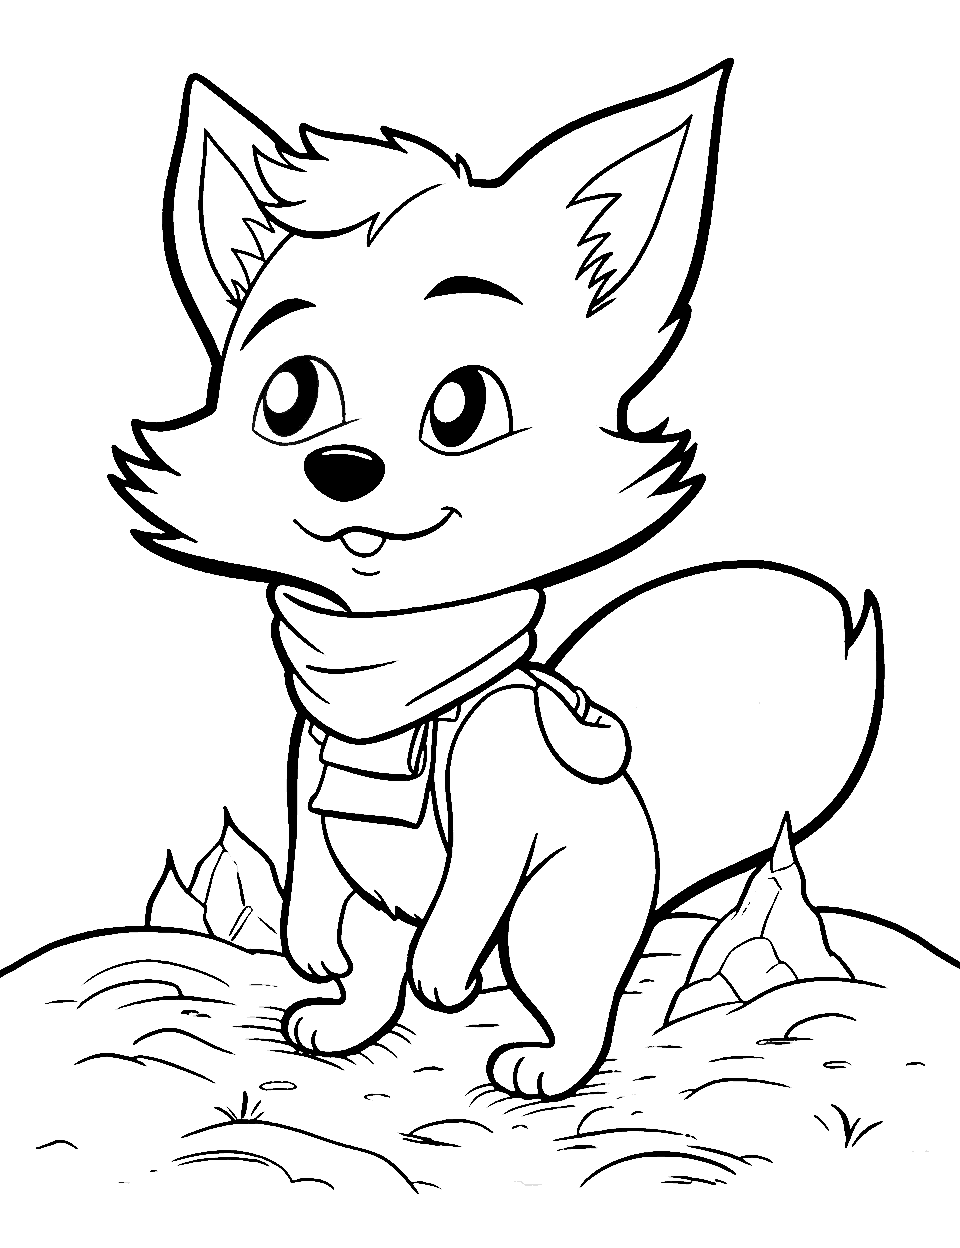 Fox Explorer  Coloring Page - A fox explorer, ready to embark on a treasure hunt adventure.